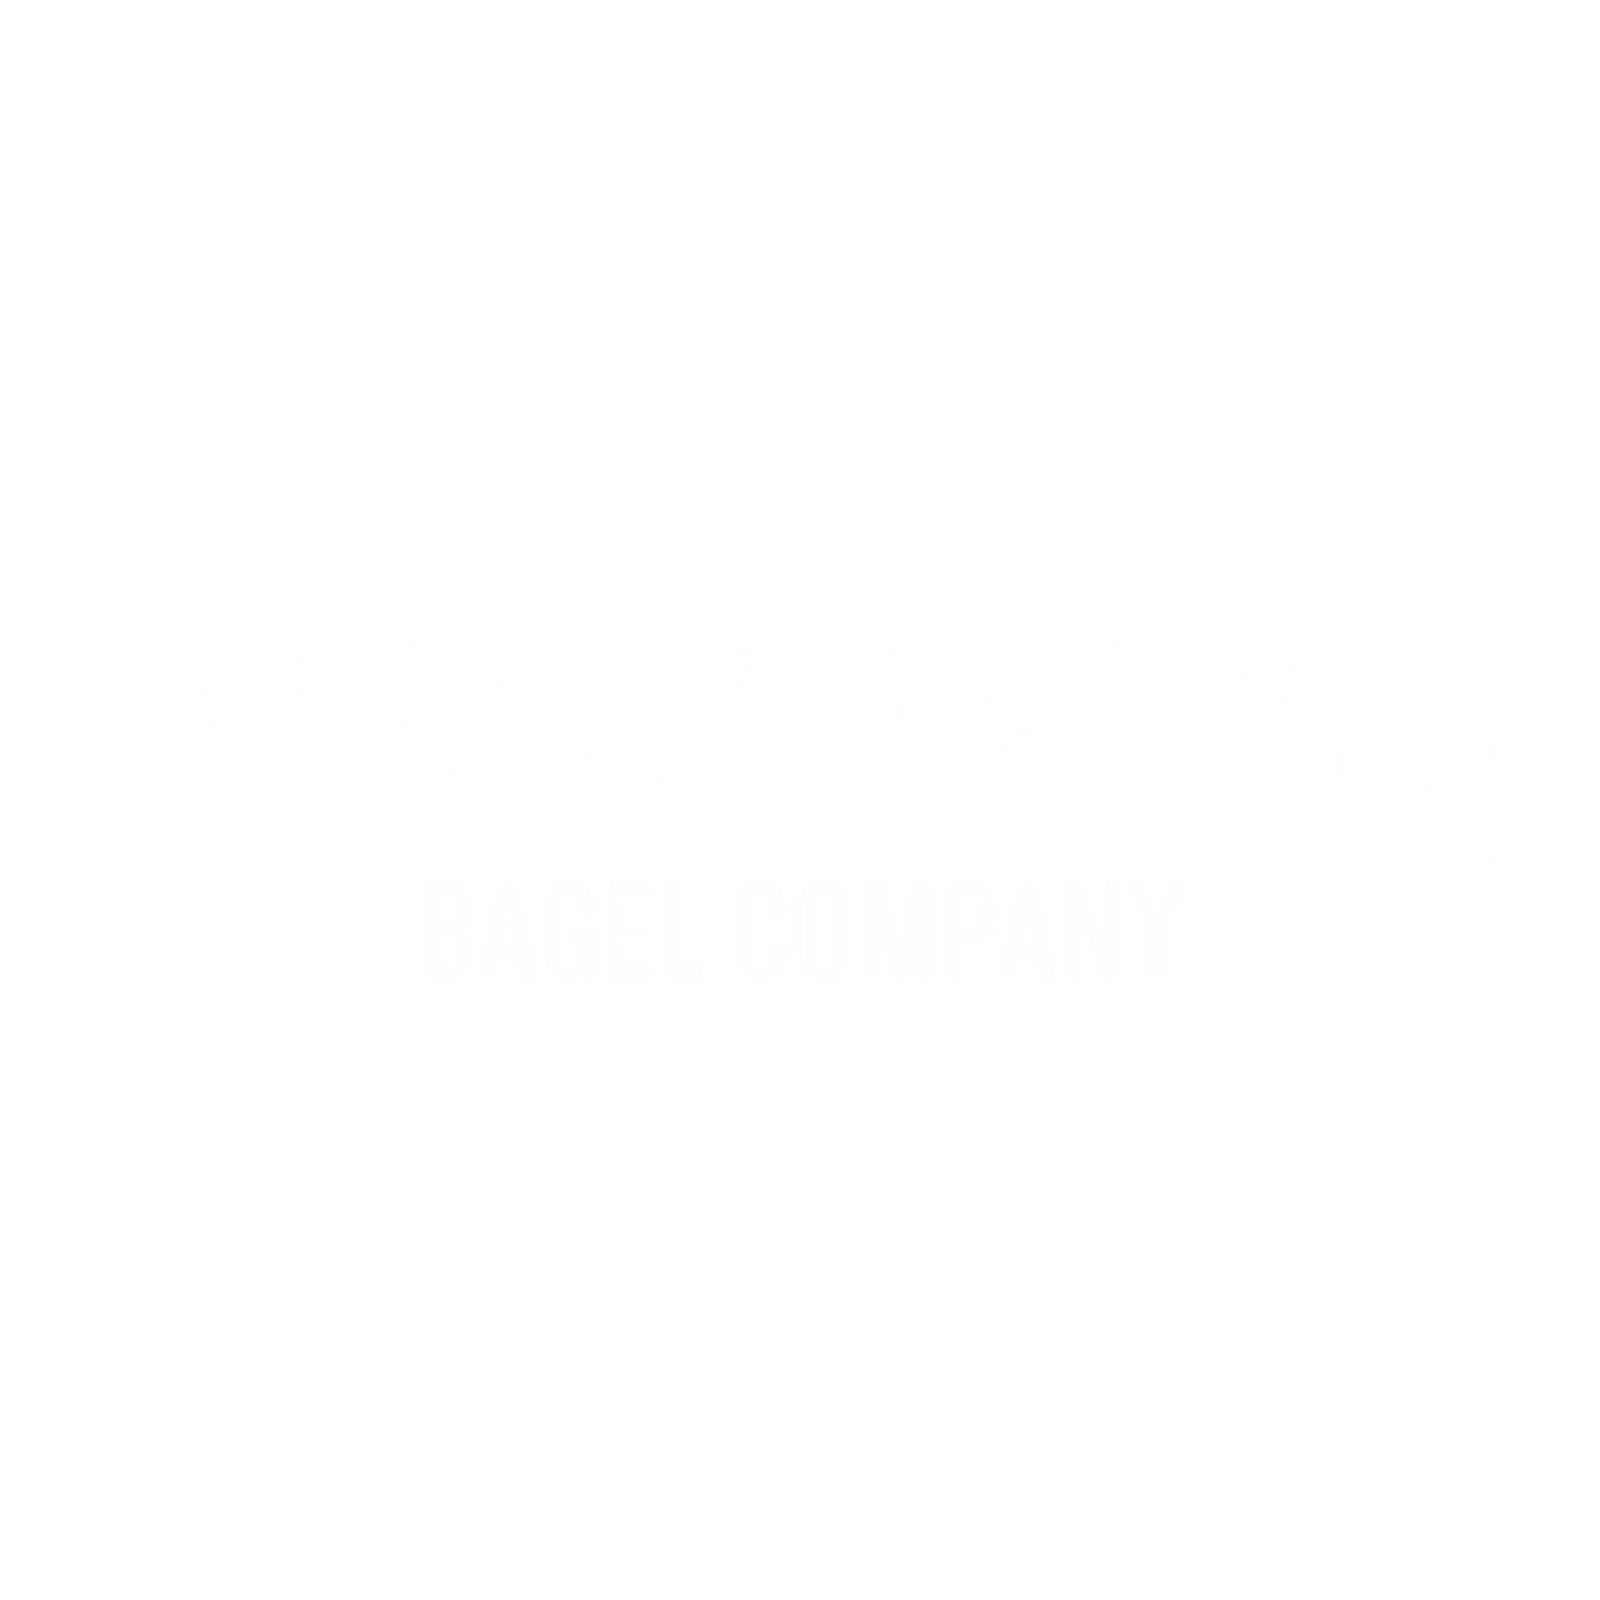 White Font Bennington Bagel Company Logo